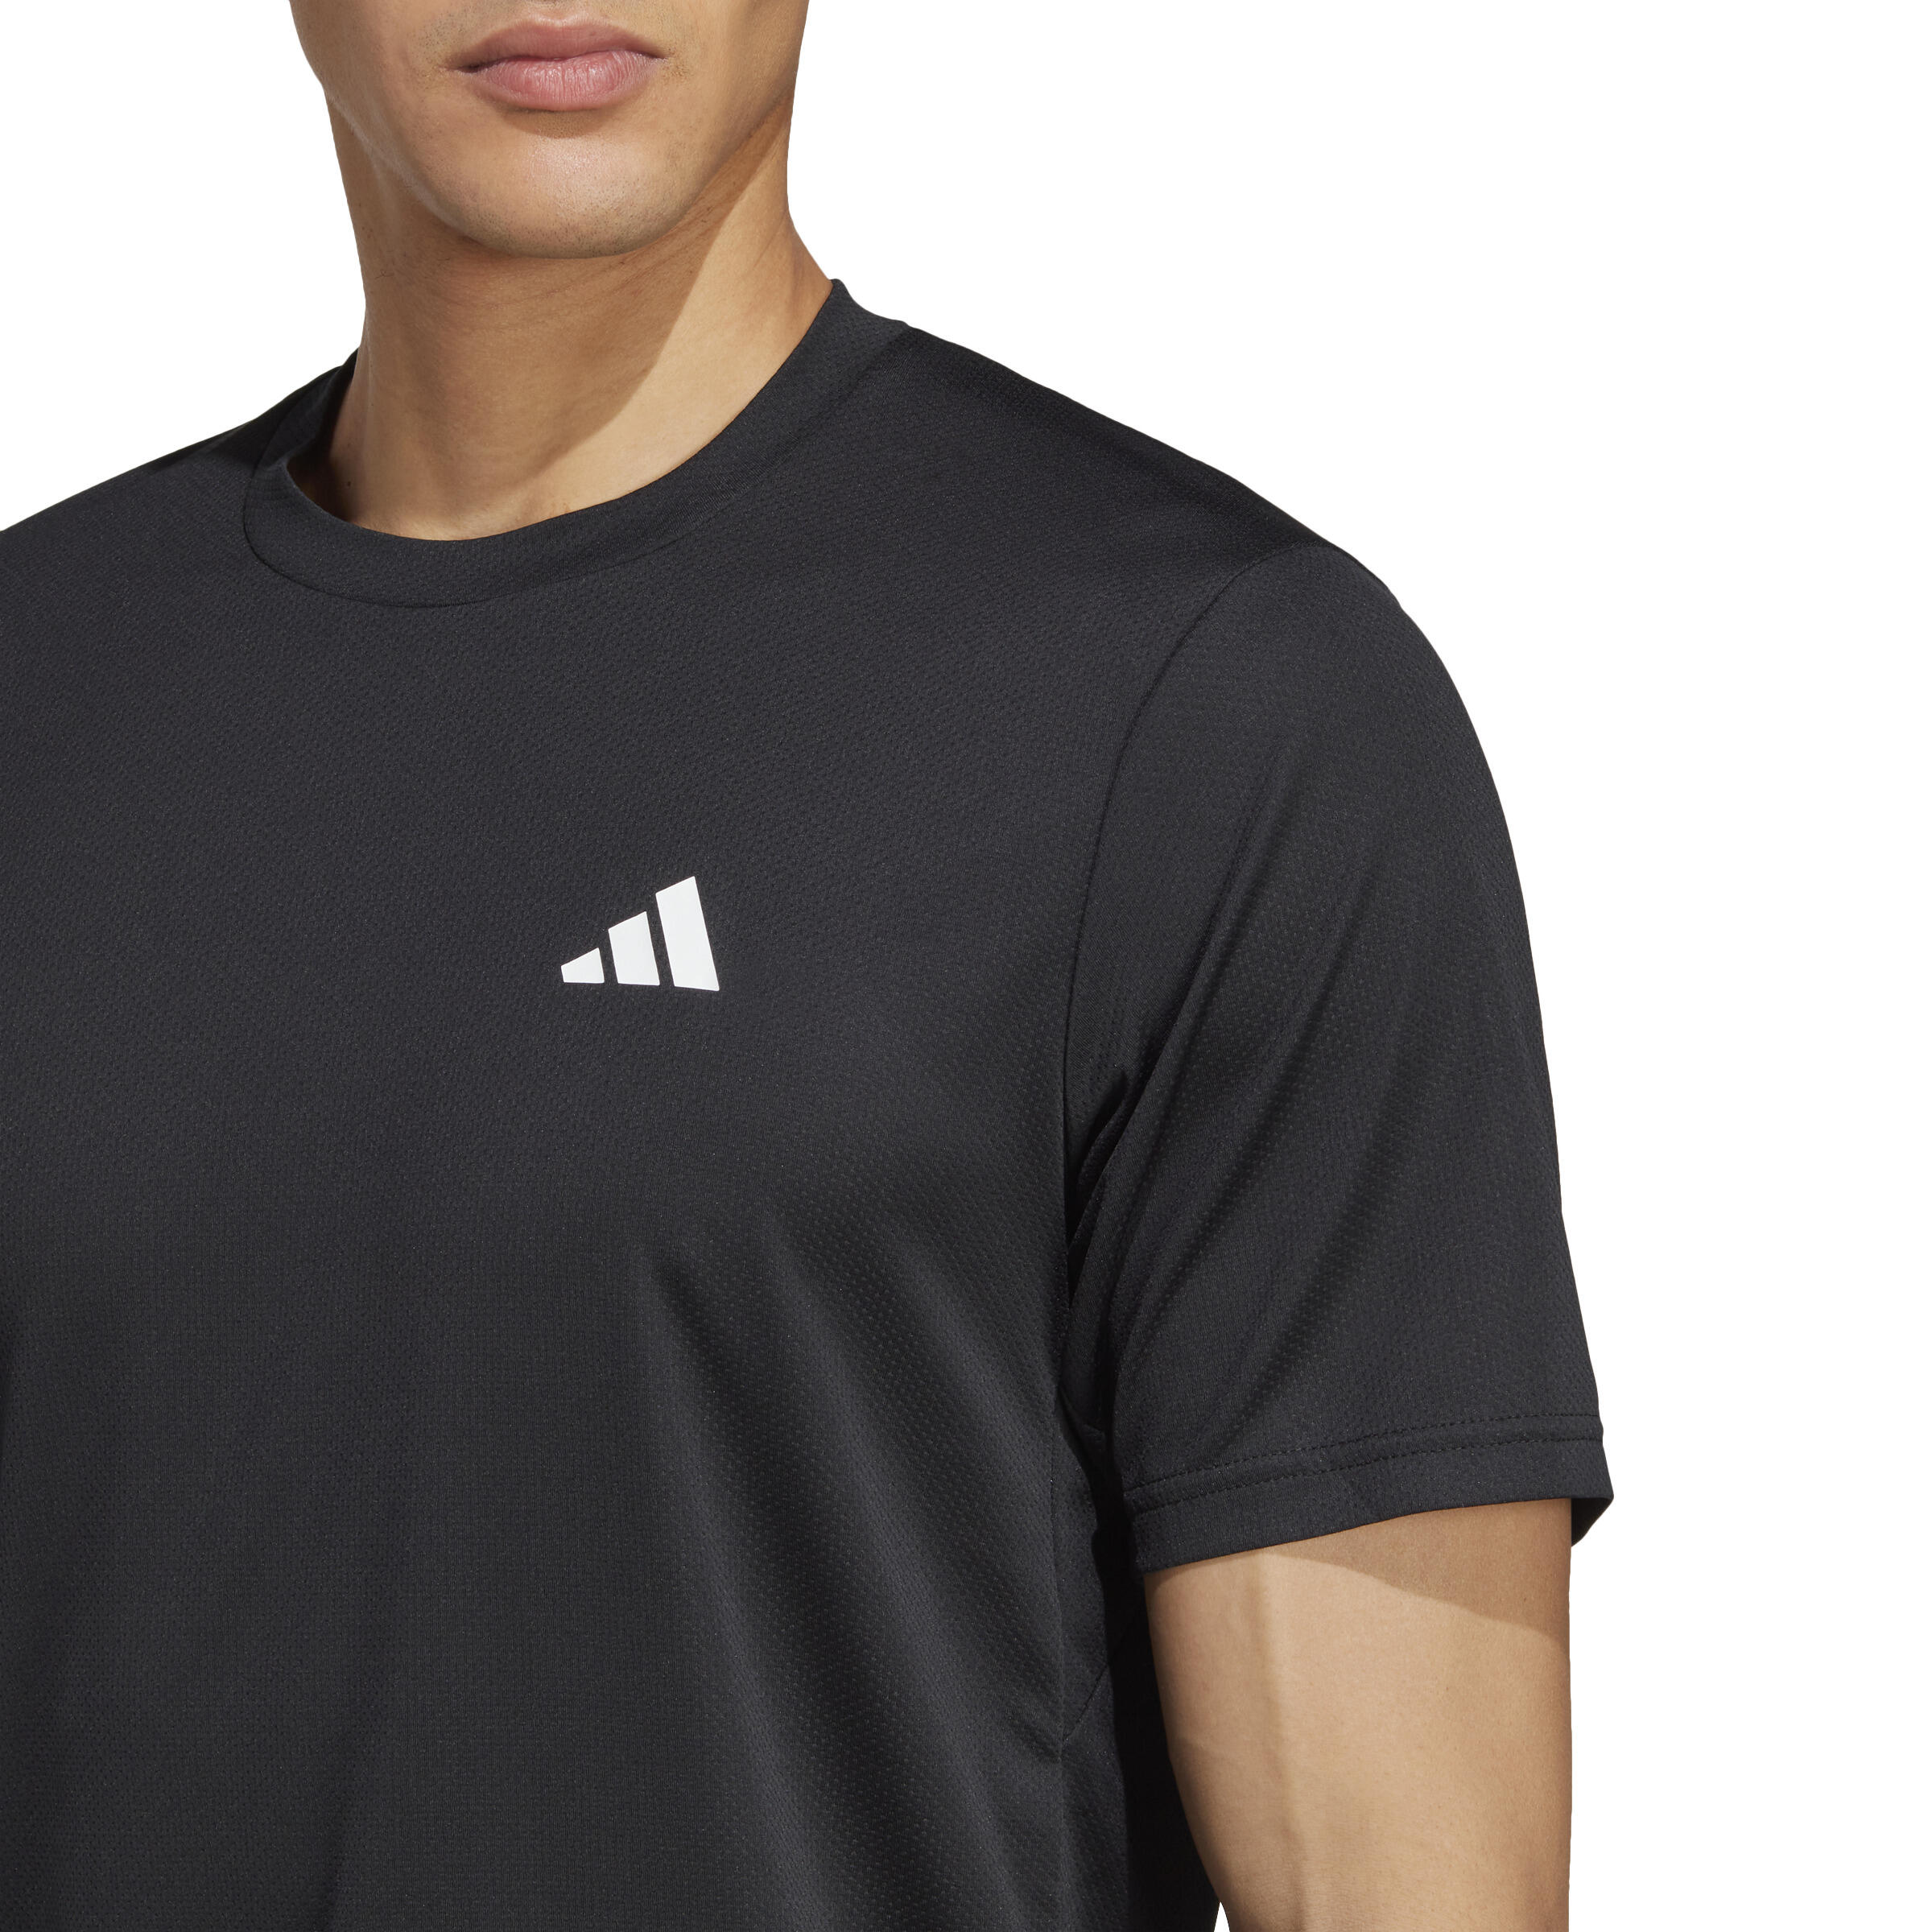 Men's Cardio Fitness T-Shirt - Black 5/7